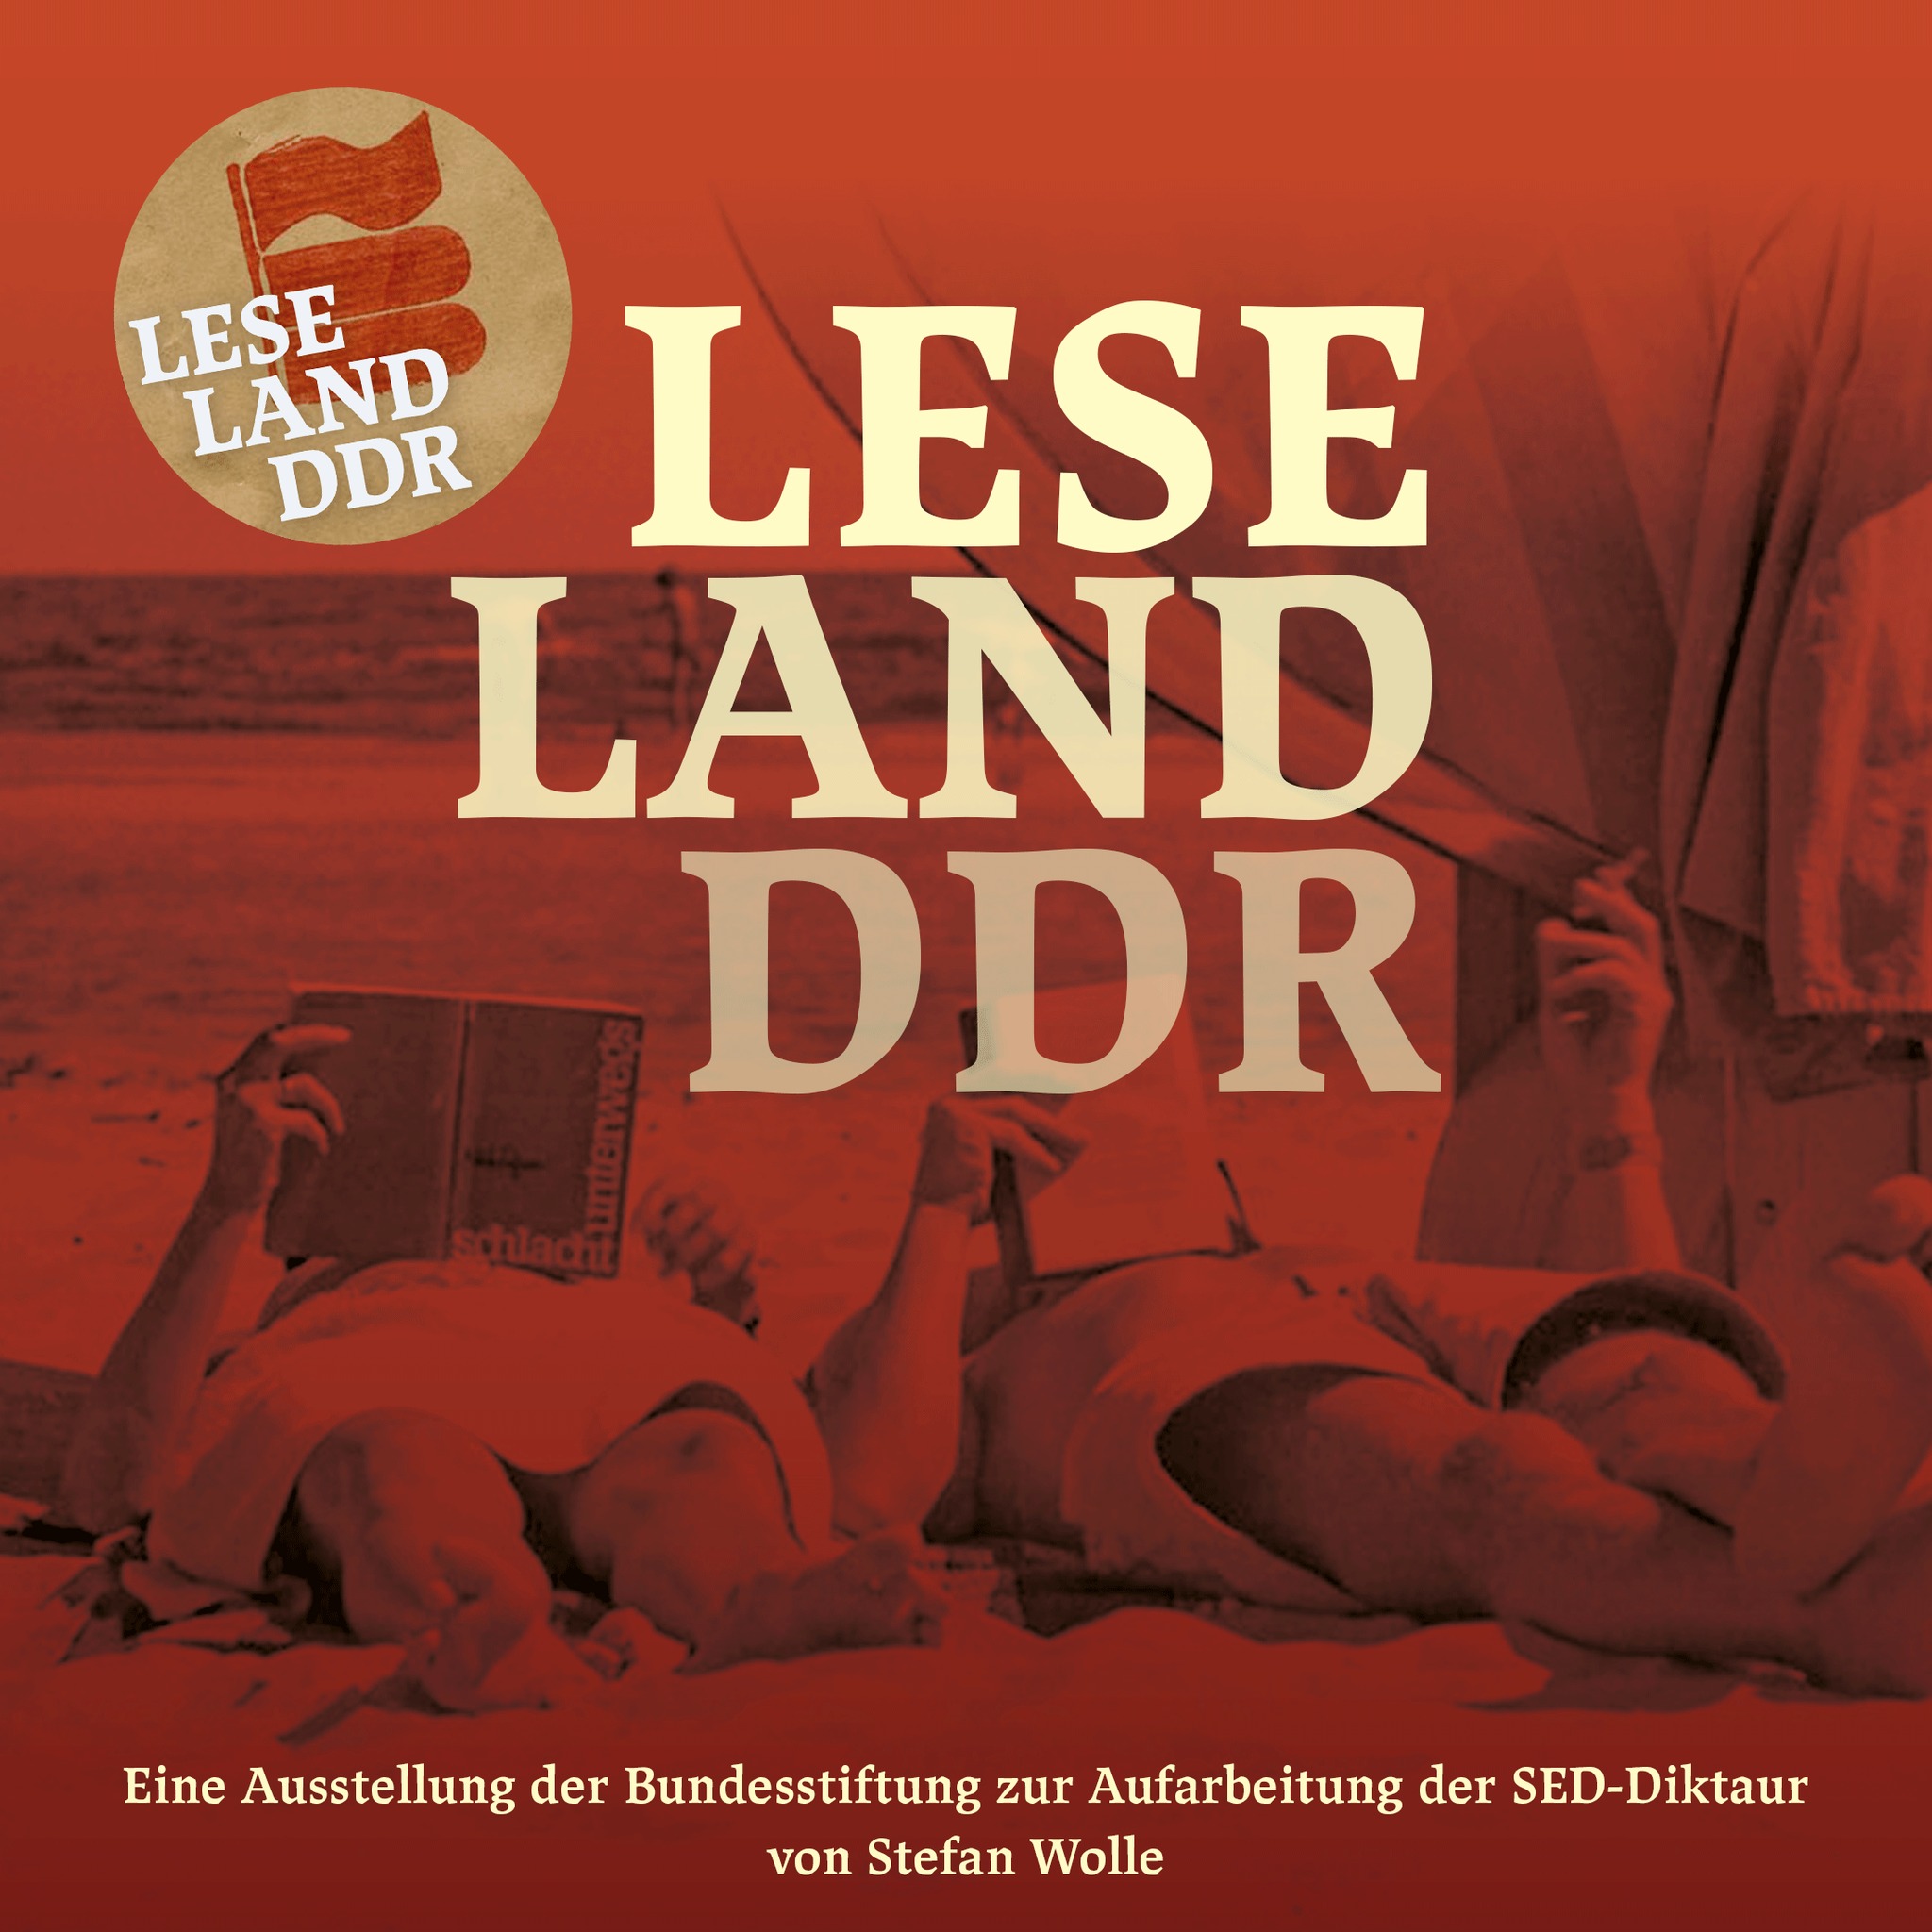 Ankündigung Leseland DDR